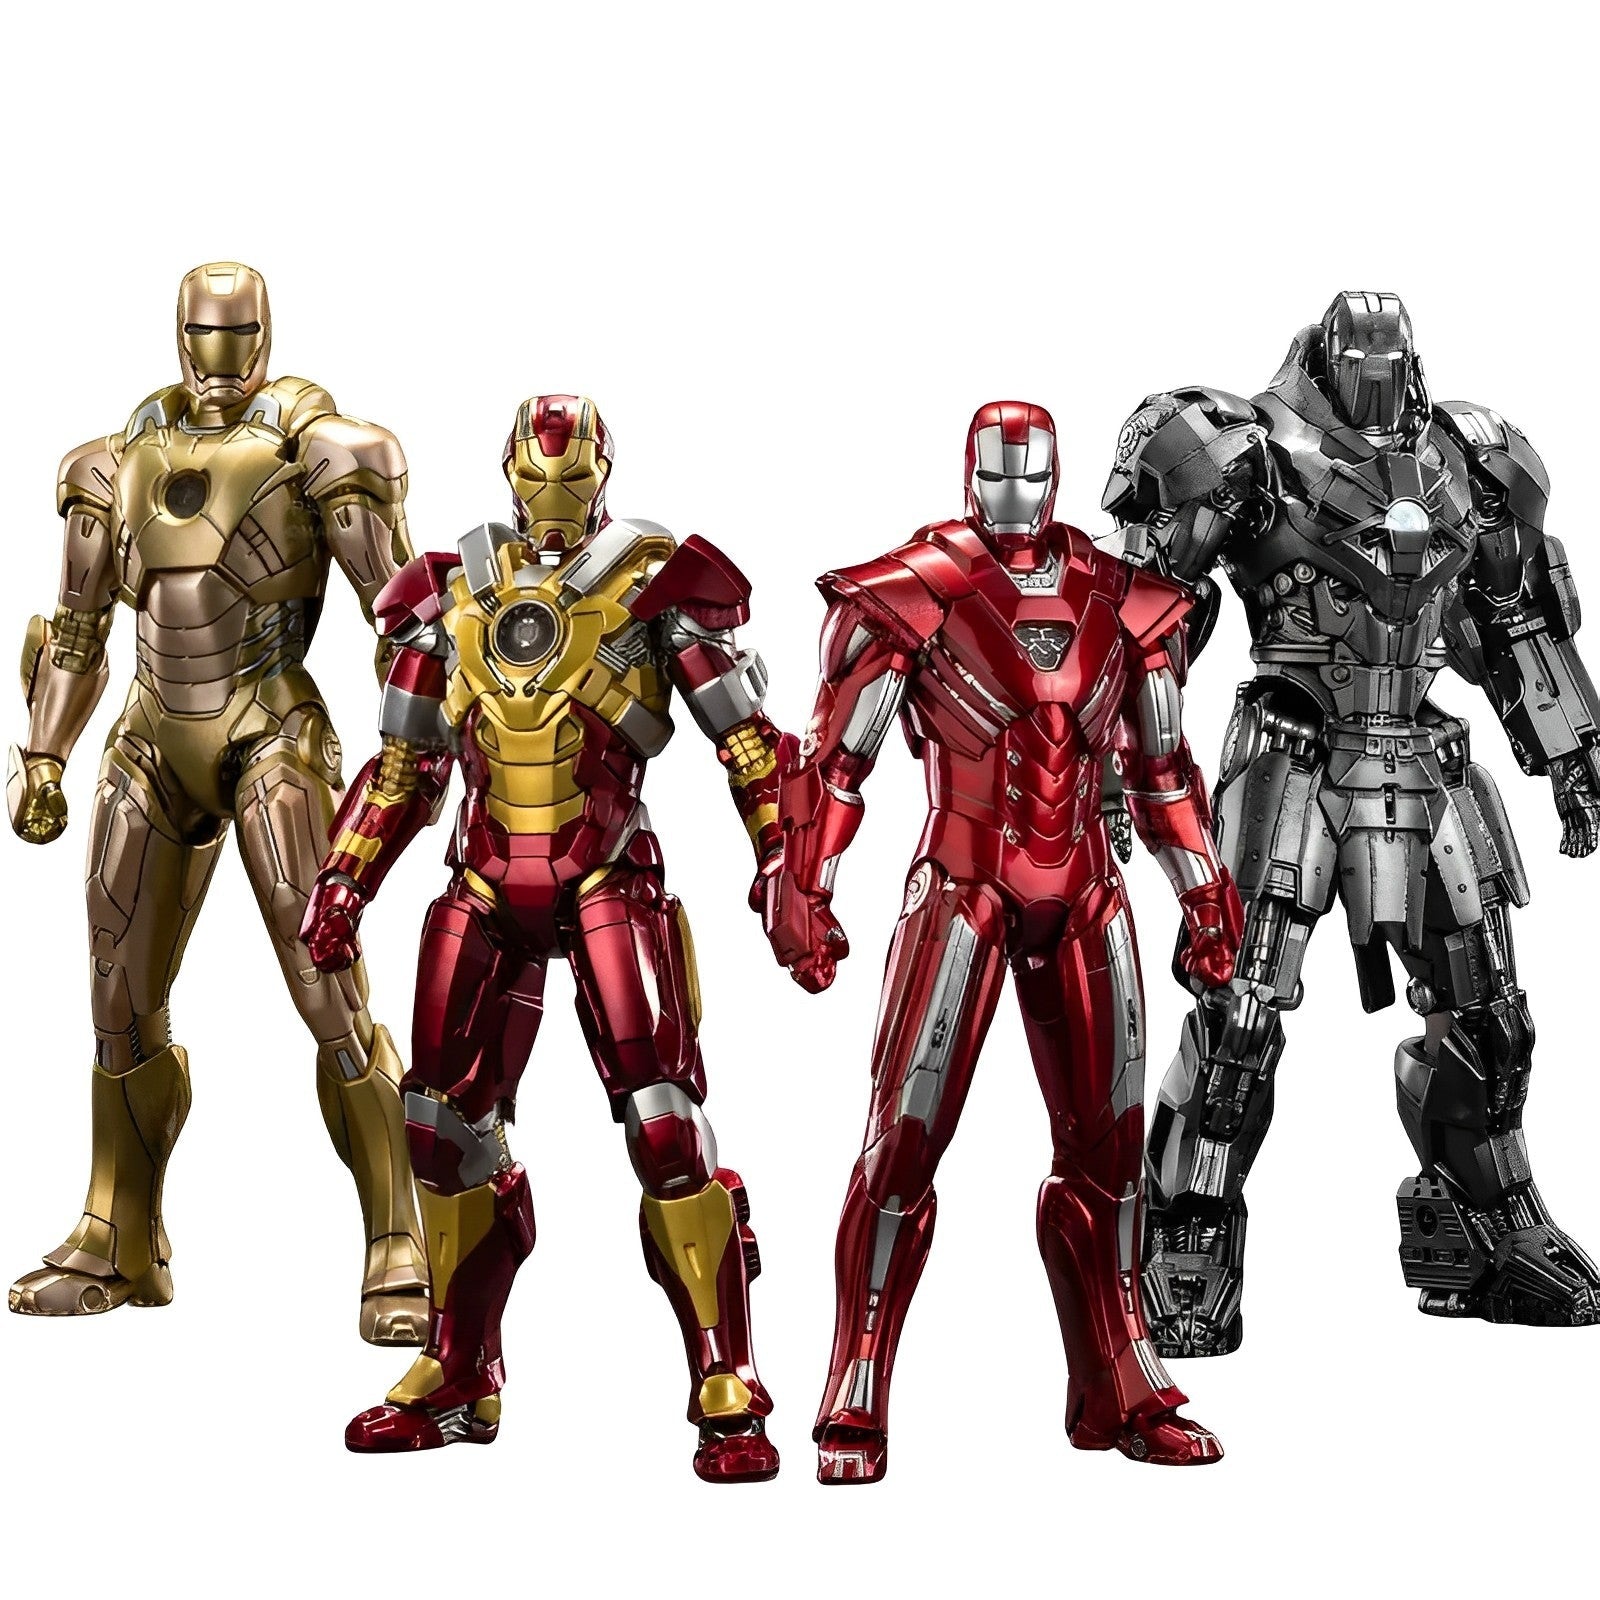 Iron Man MK17/21/33, and Blacklash Collectible Figures